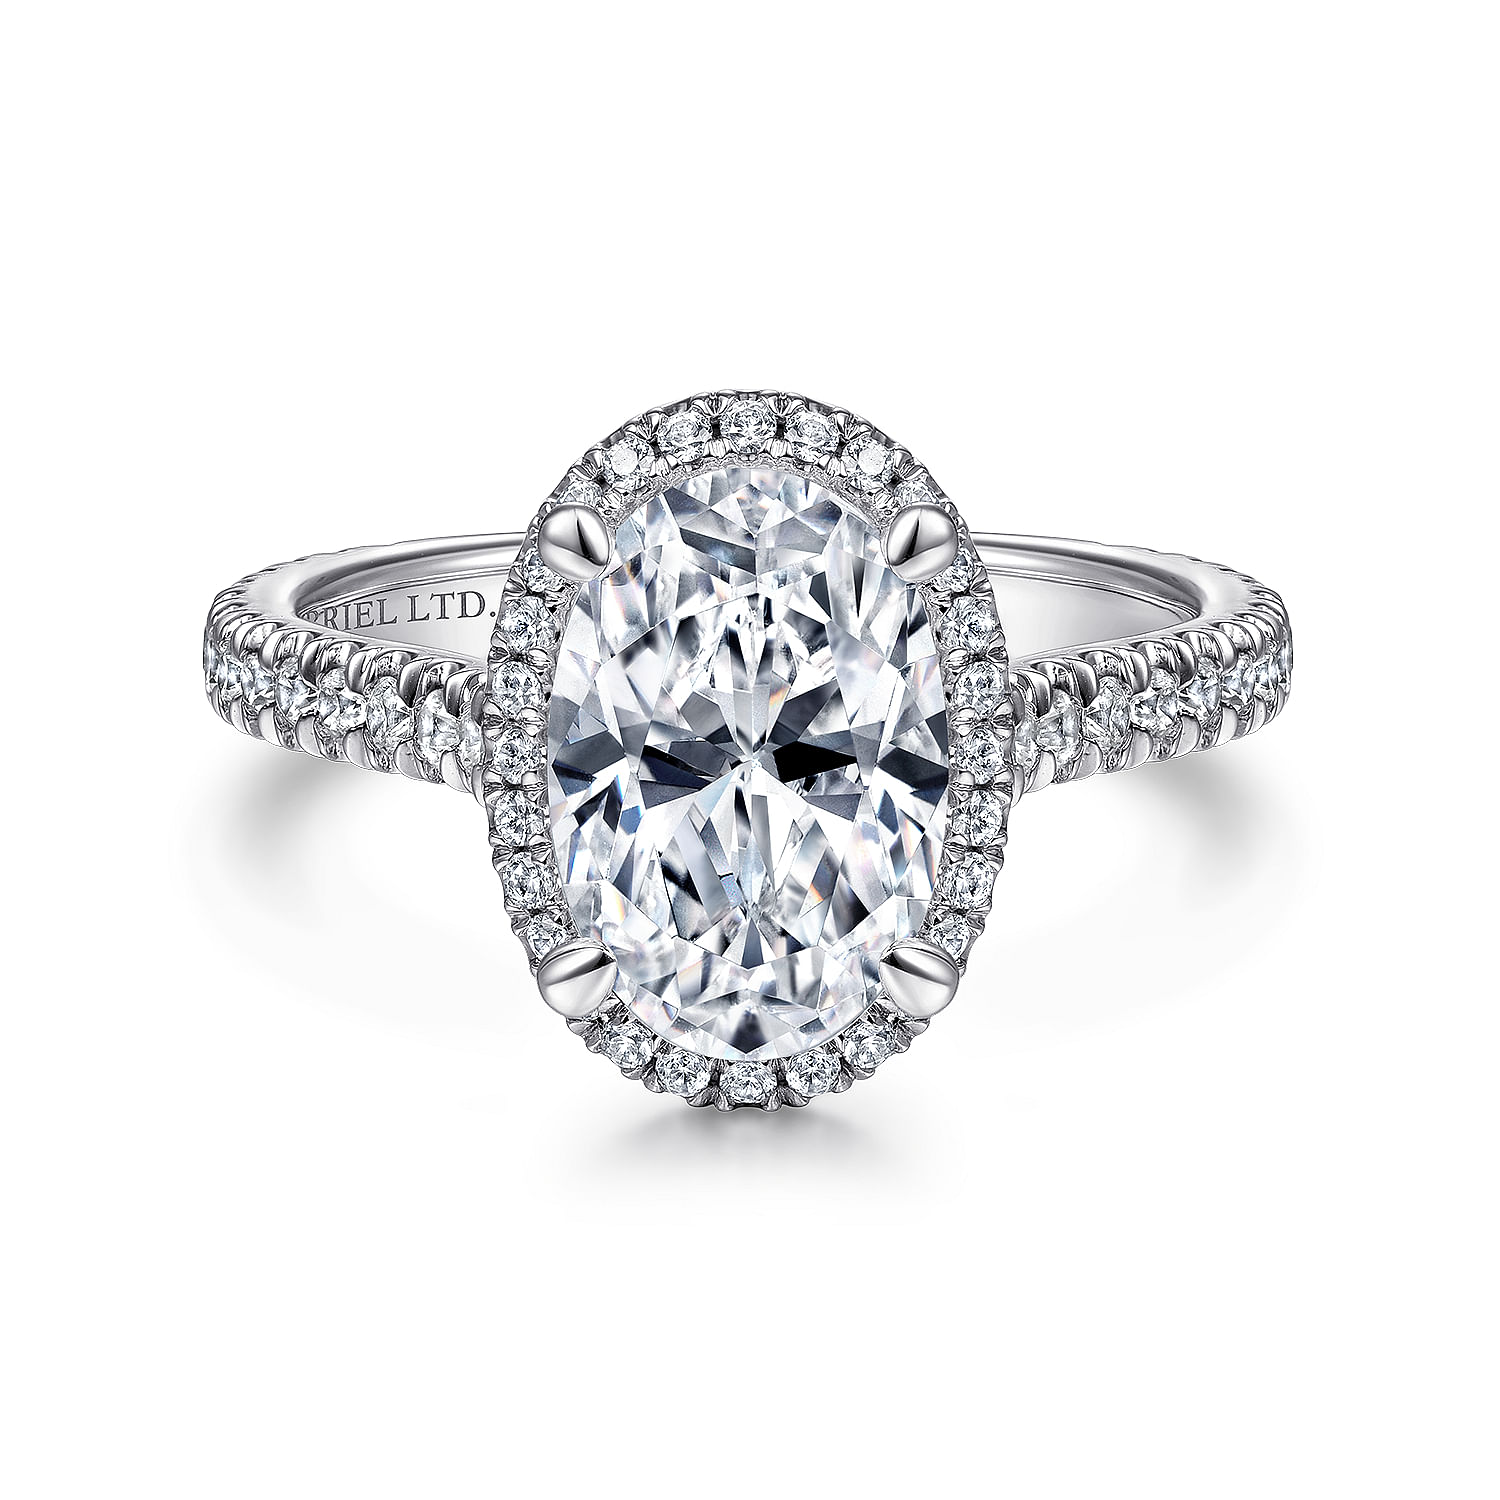 Gabriel - 18K White Gold Oval Halo Diamond Engagement Ring